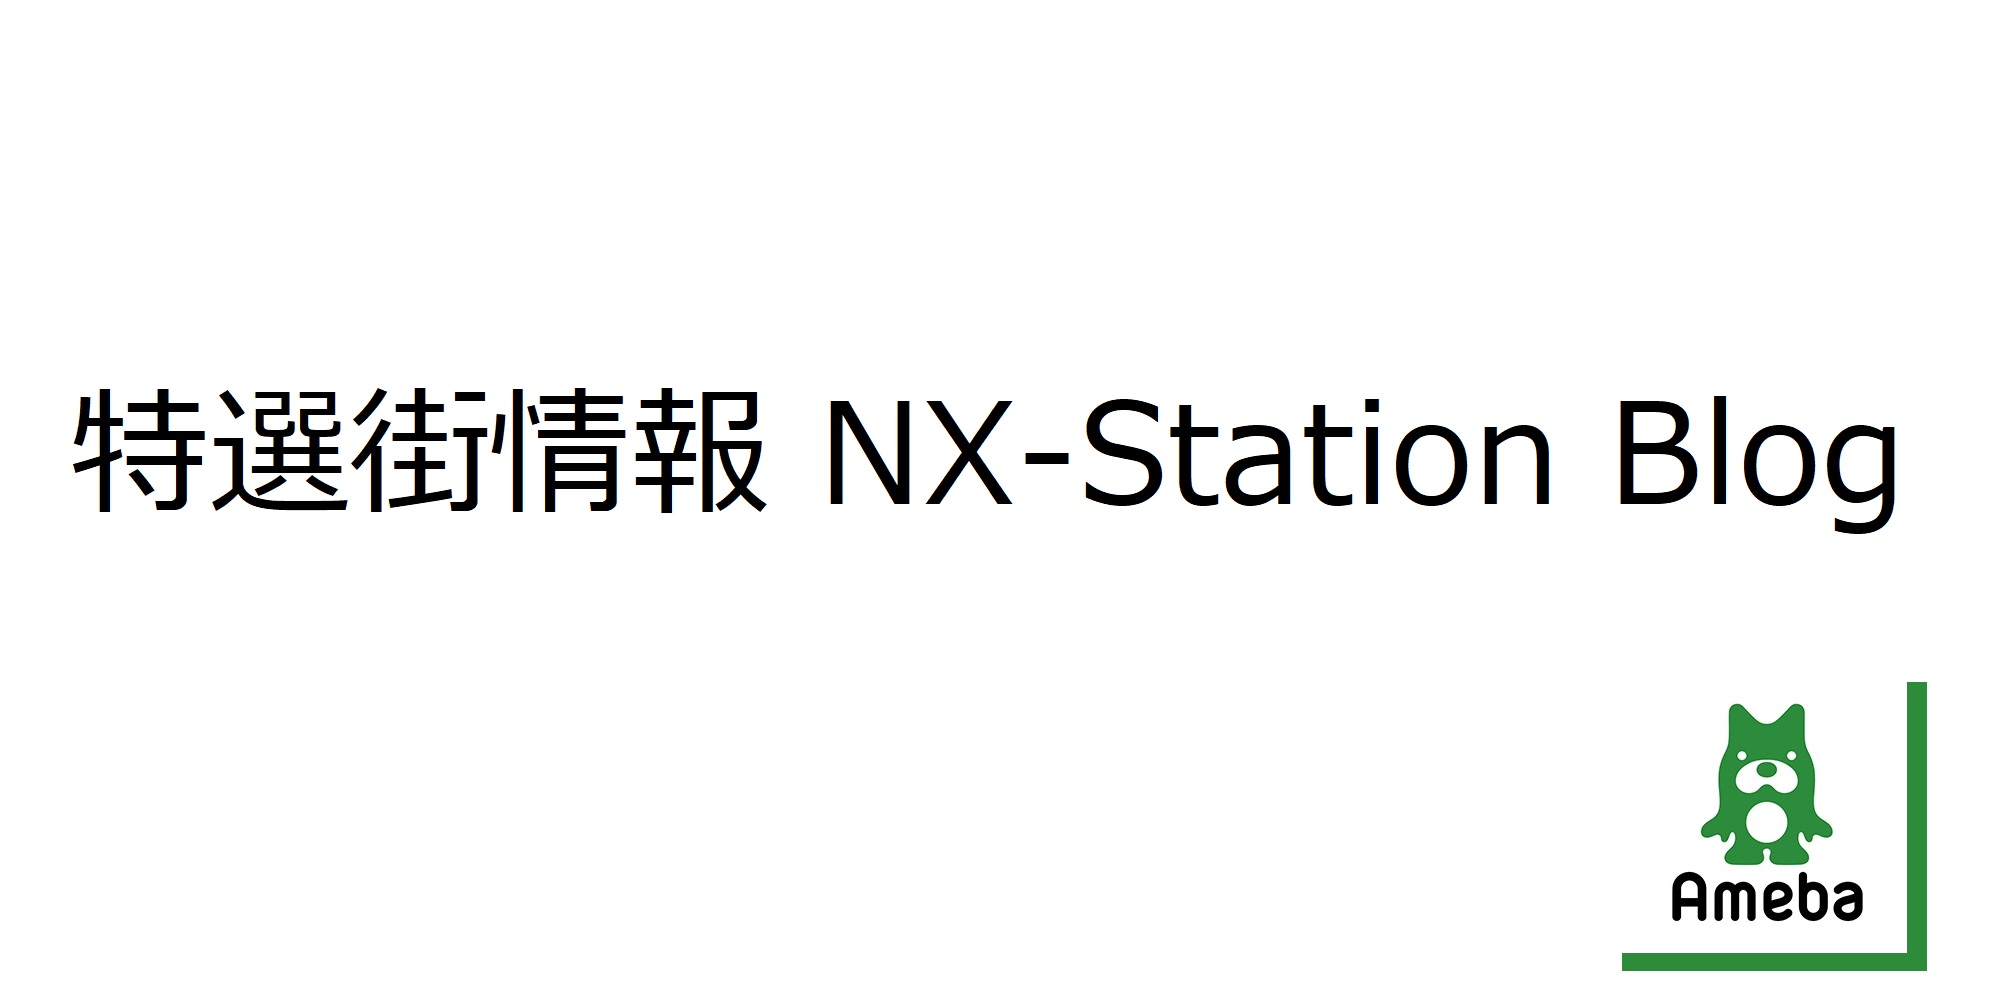 NX-Station Blog